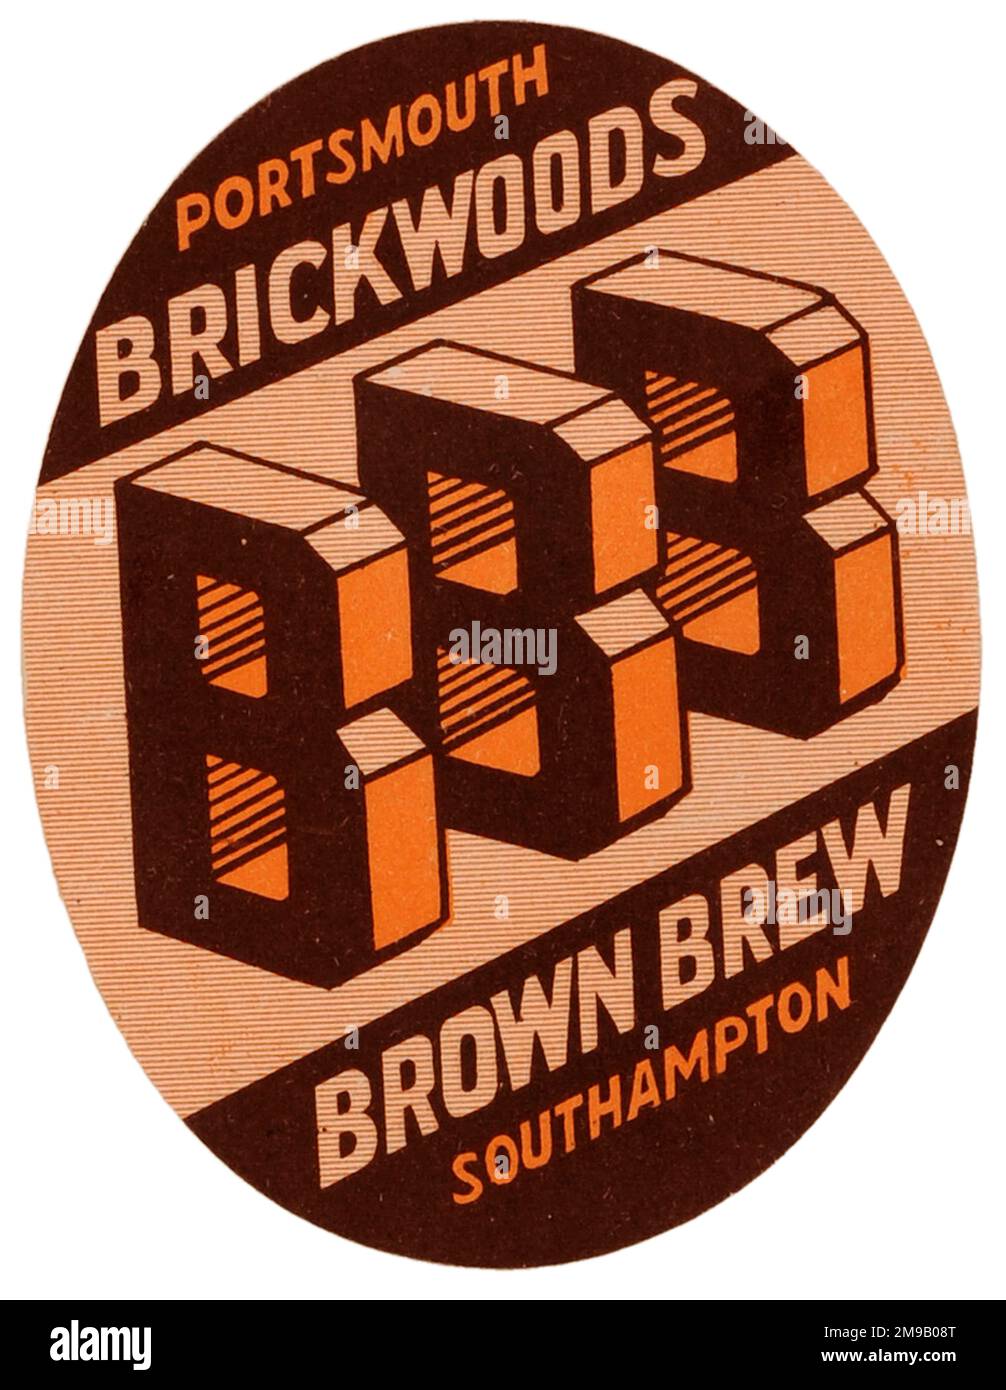 Brickwoods Brown Brew Stock Photo